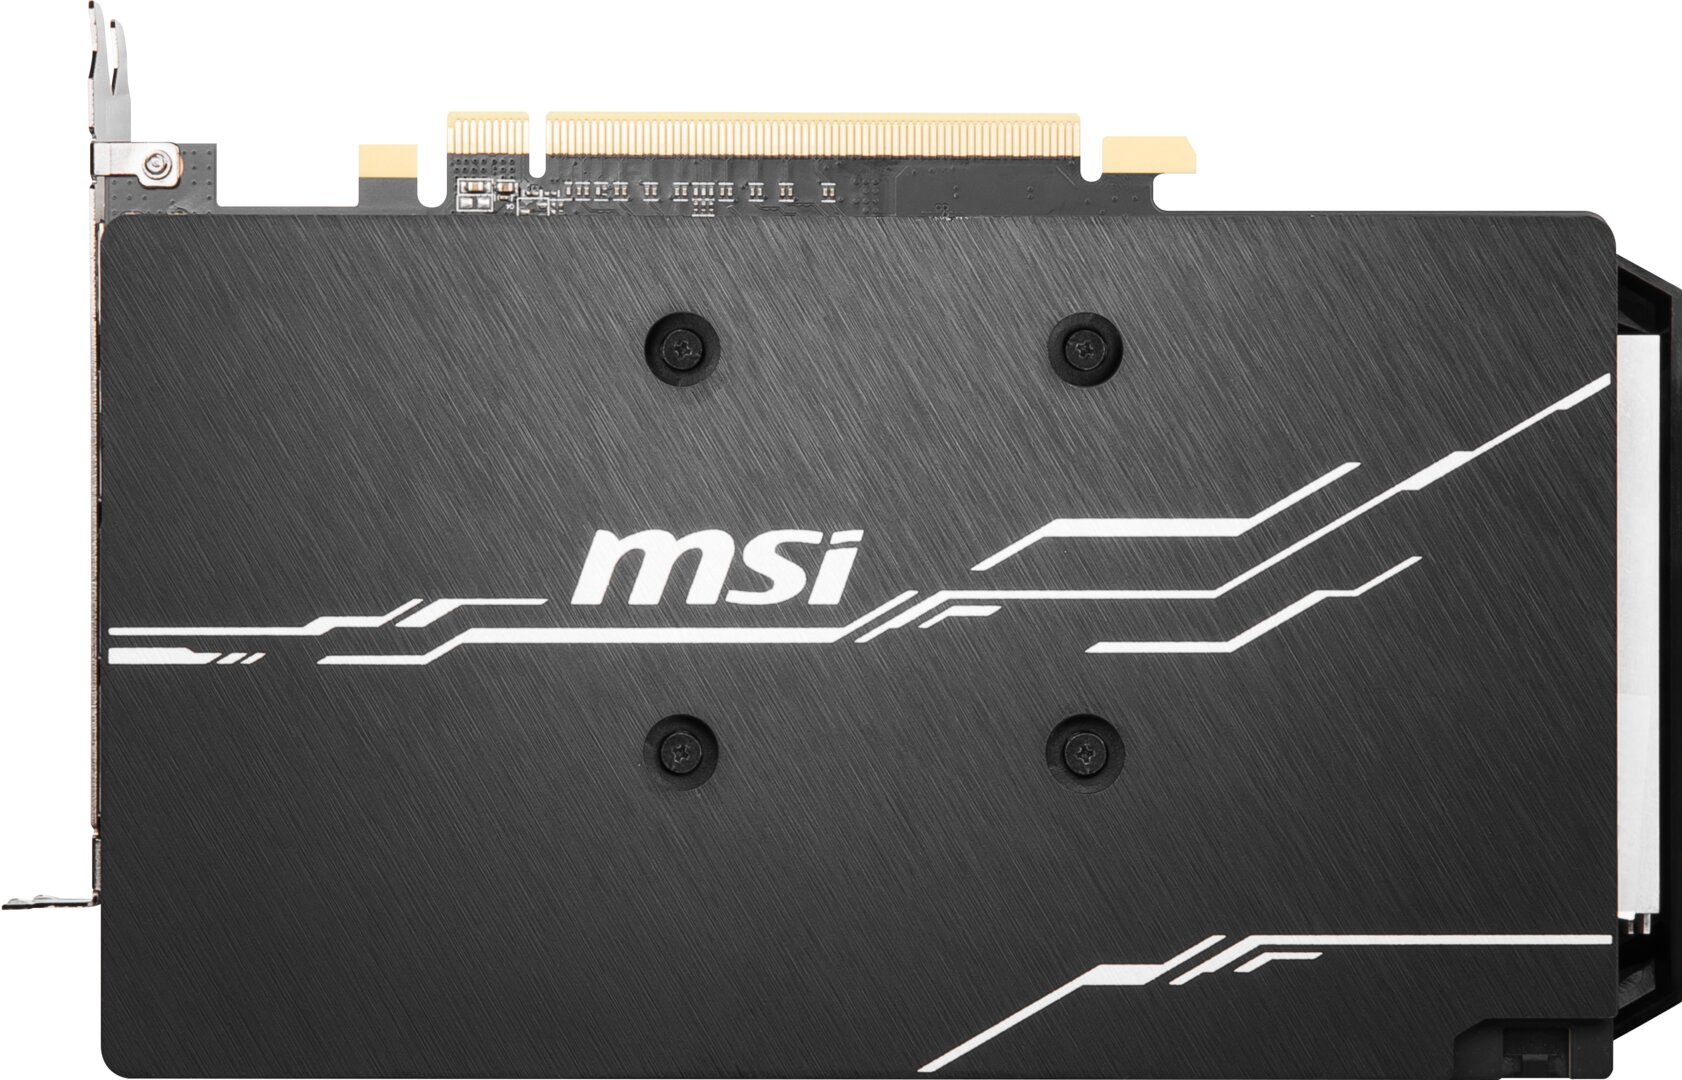 MSI Radeon RX 5500 XT Mech